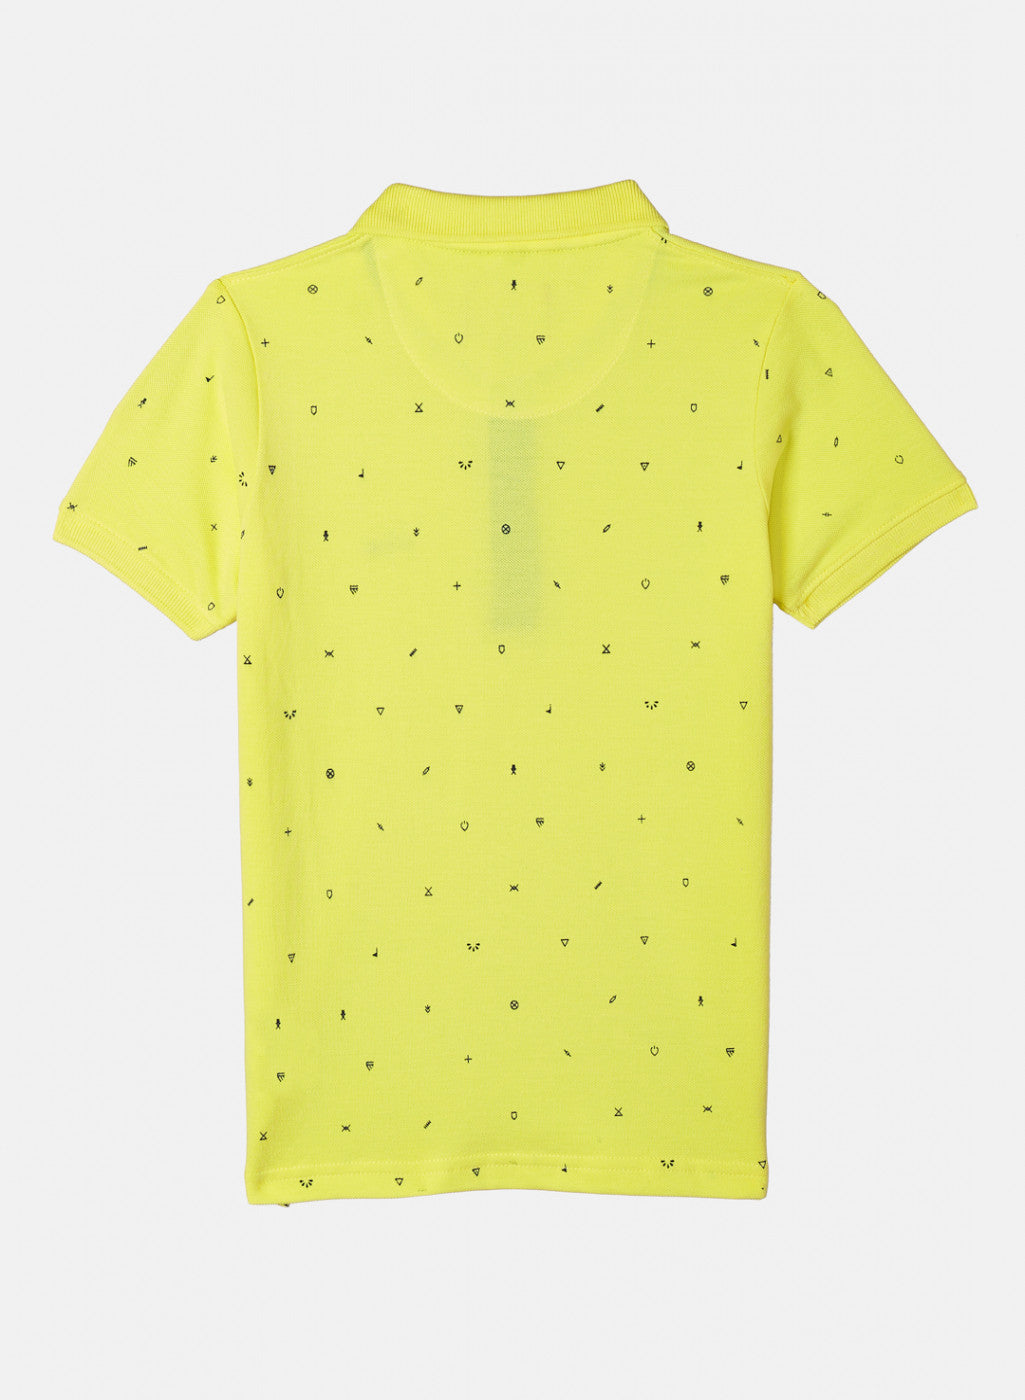 Boys Bright Yellow Printed T-Shirt